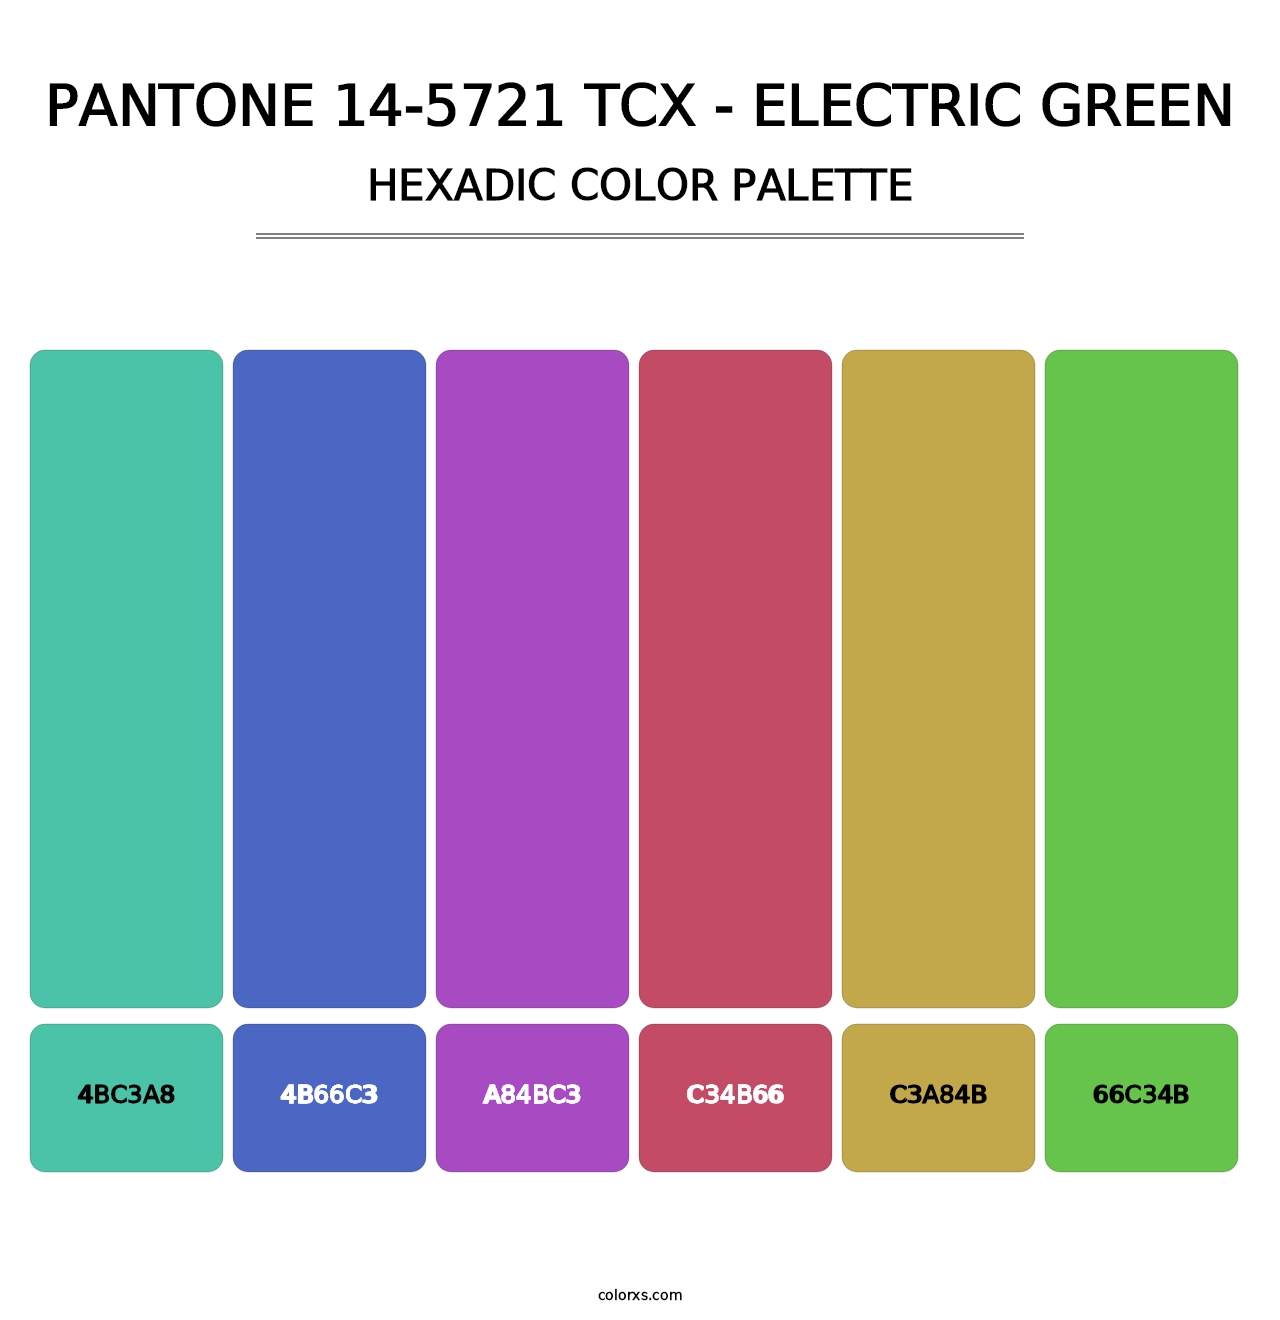 PANTONE 14-5721 TCX - Electric Green - Hexadic Color Palette